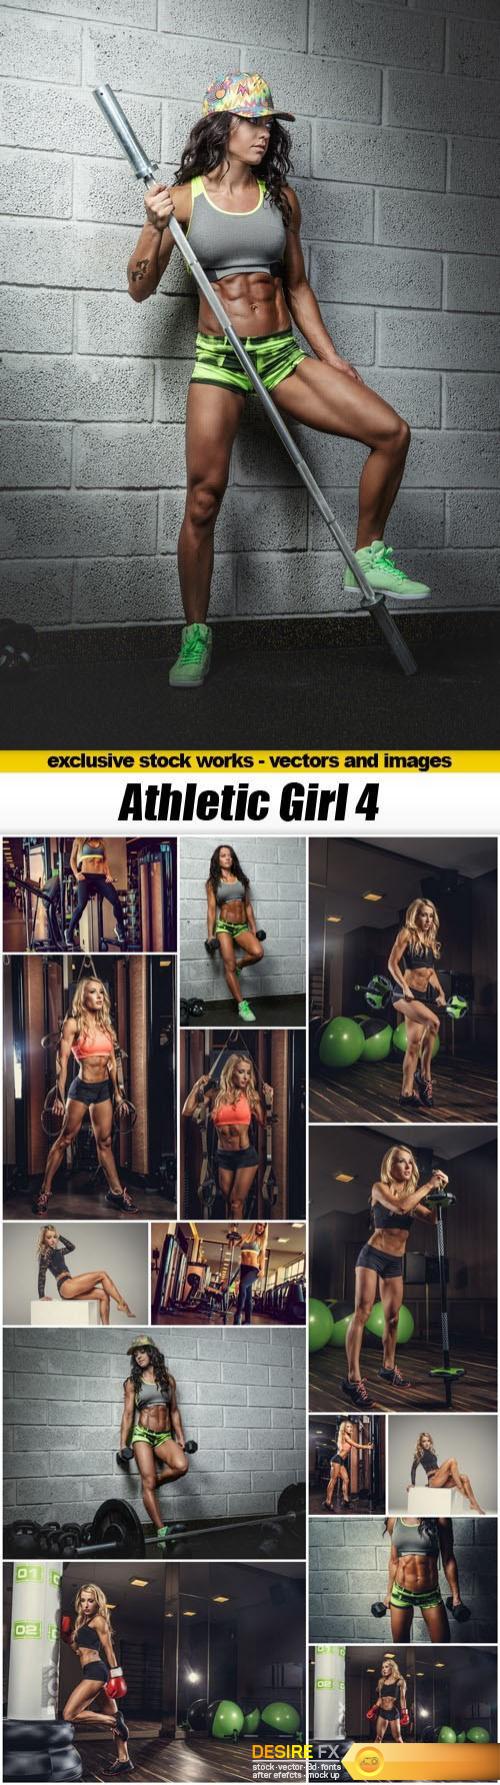 Athletic Girl 4